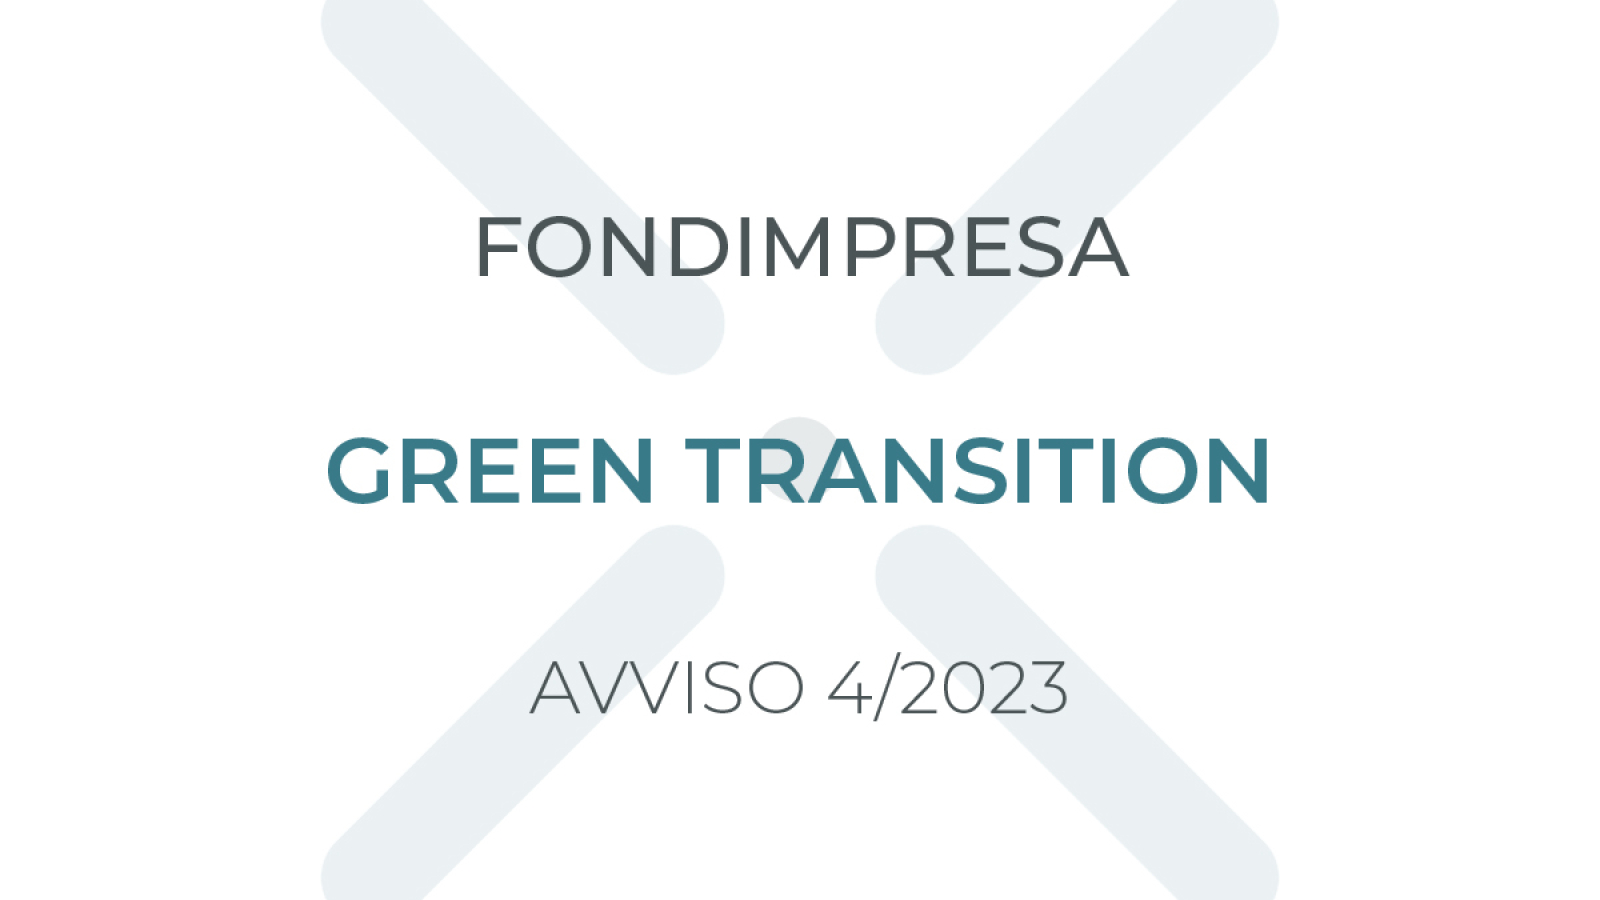 AVVISO 4-2023-green-transition-fondimpresa-economia-nexusproskills